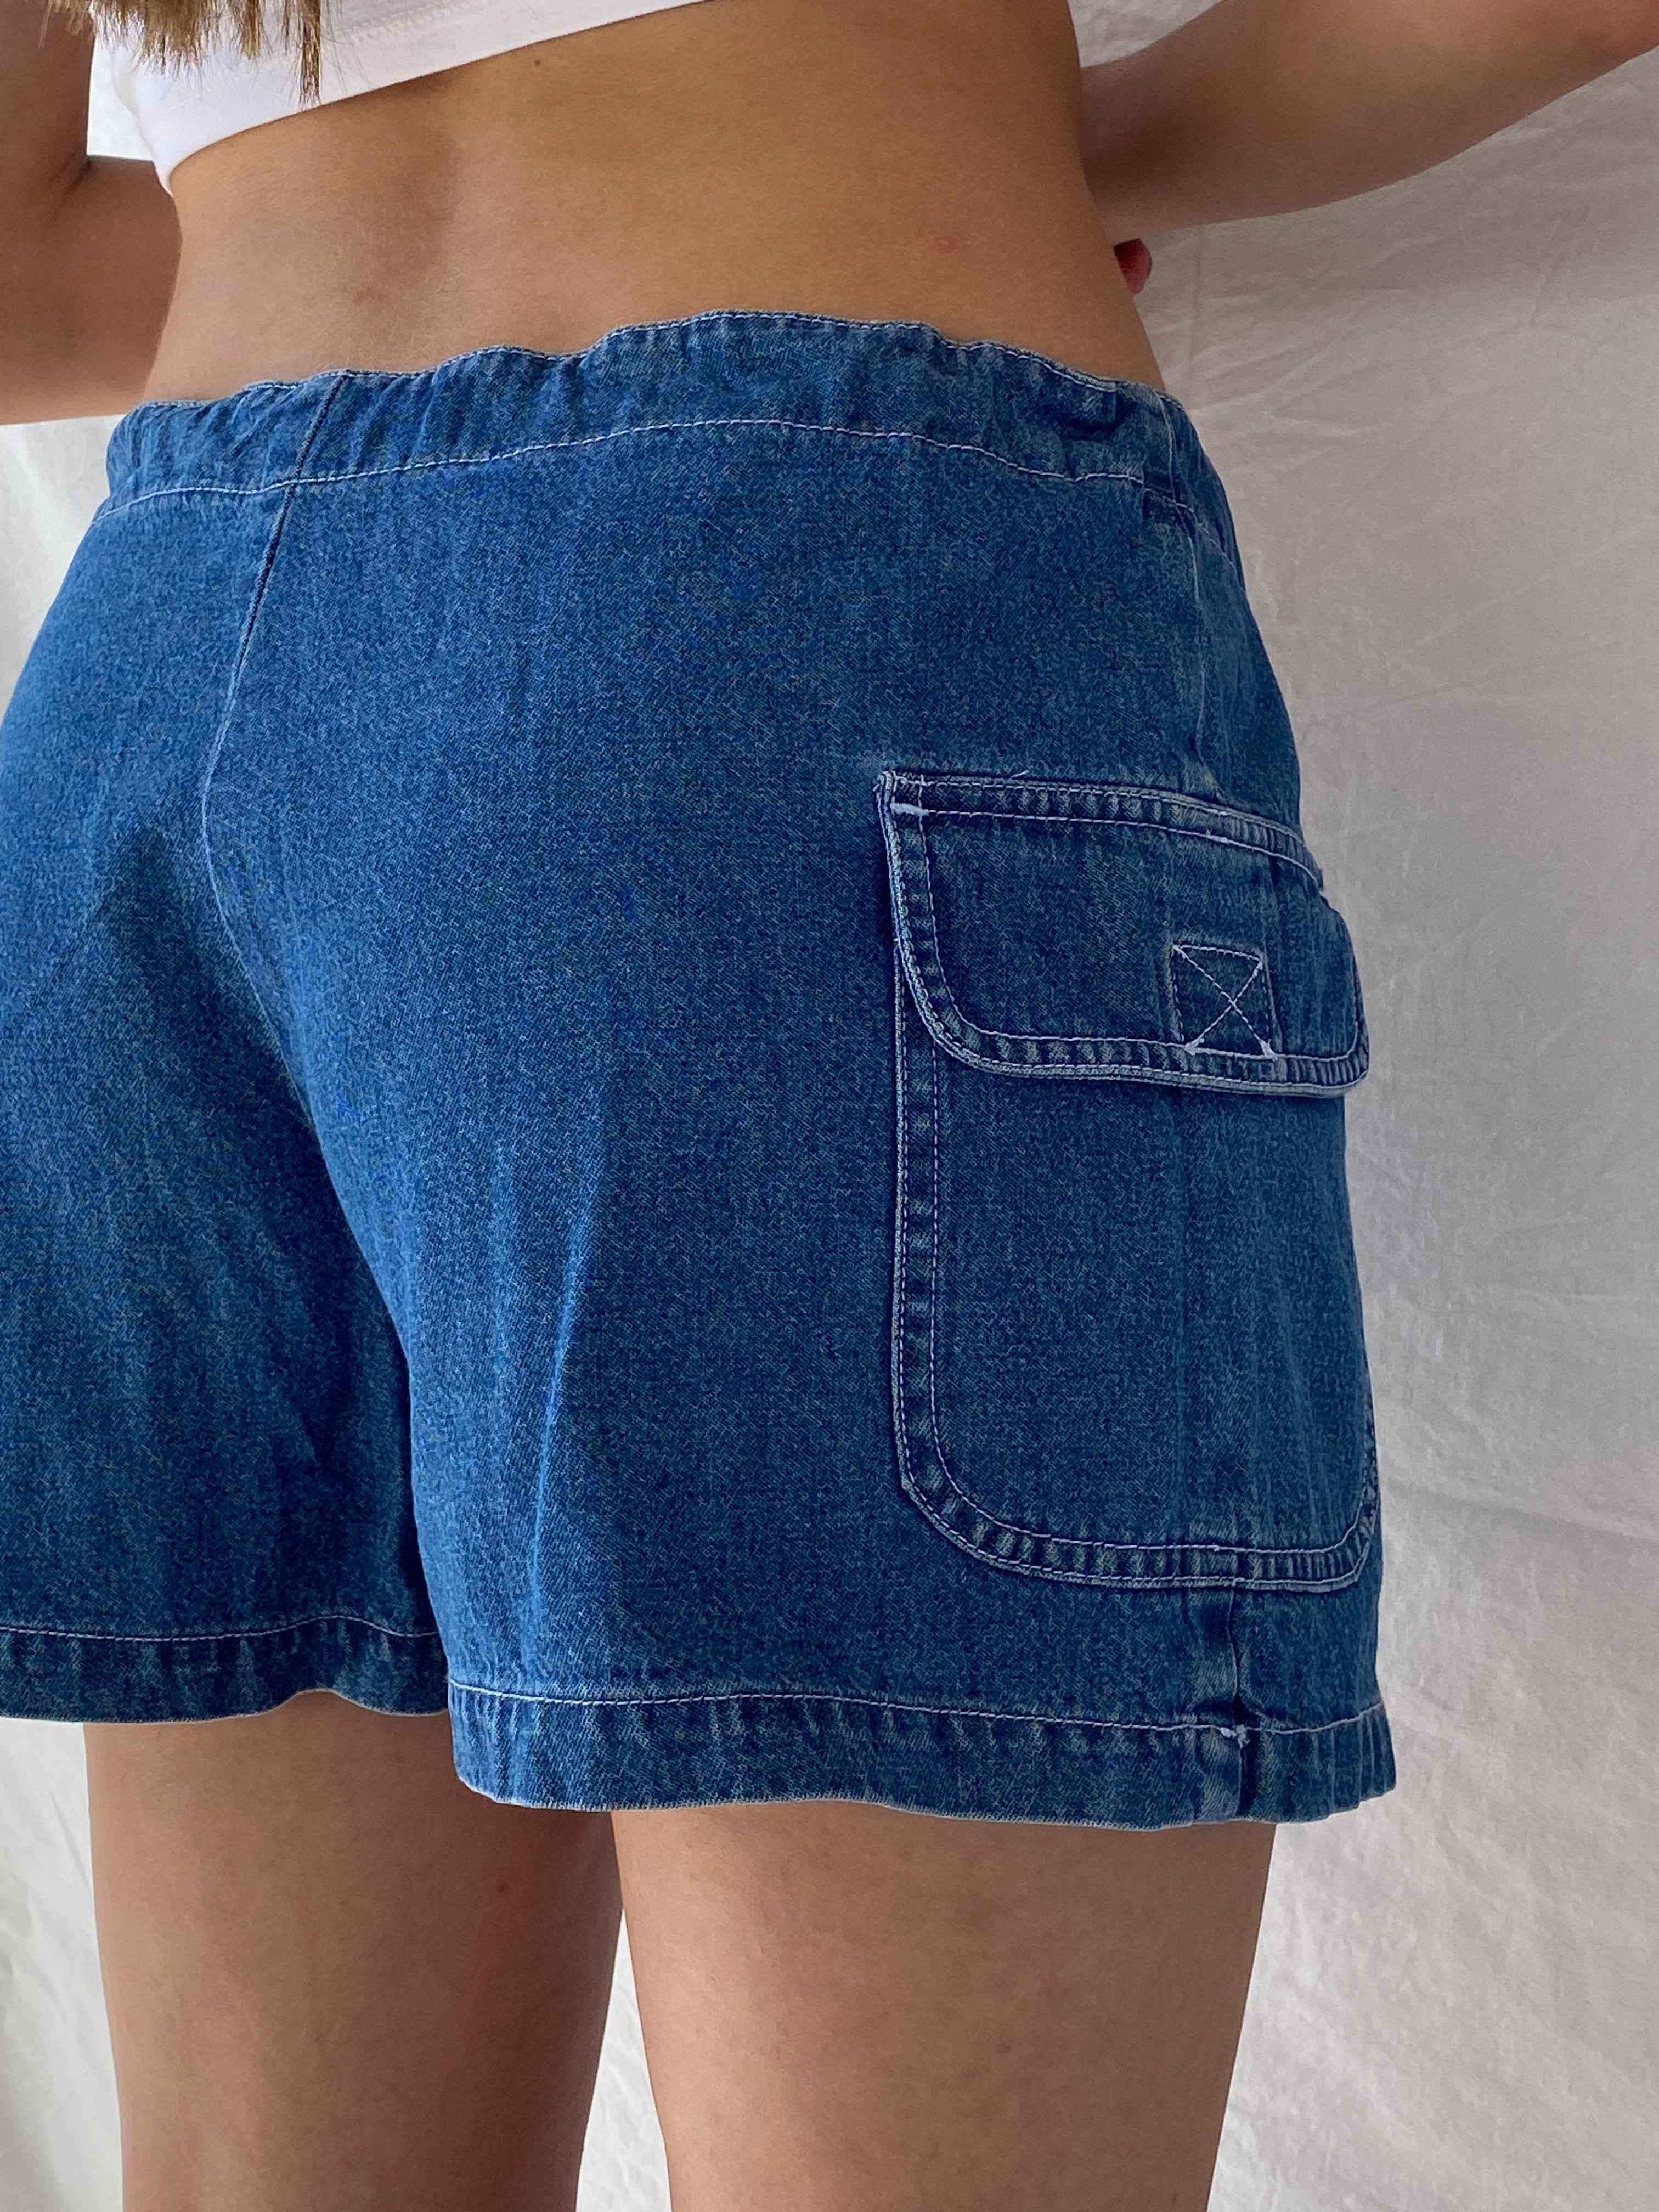 Y2K Andrew‘s Blues Shorts - Balagan Vintage Shorts 00s, 90s, Mira